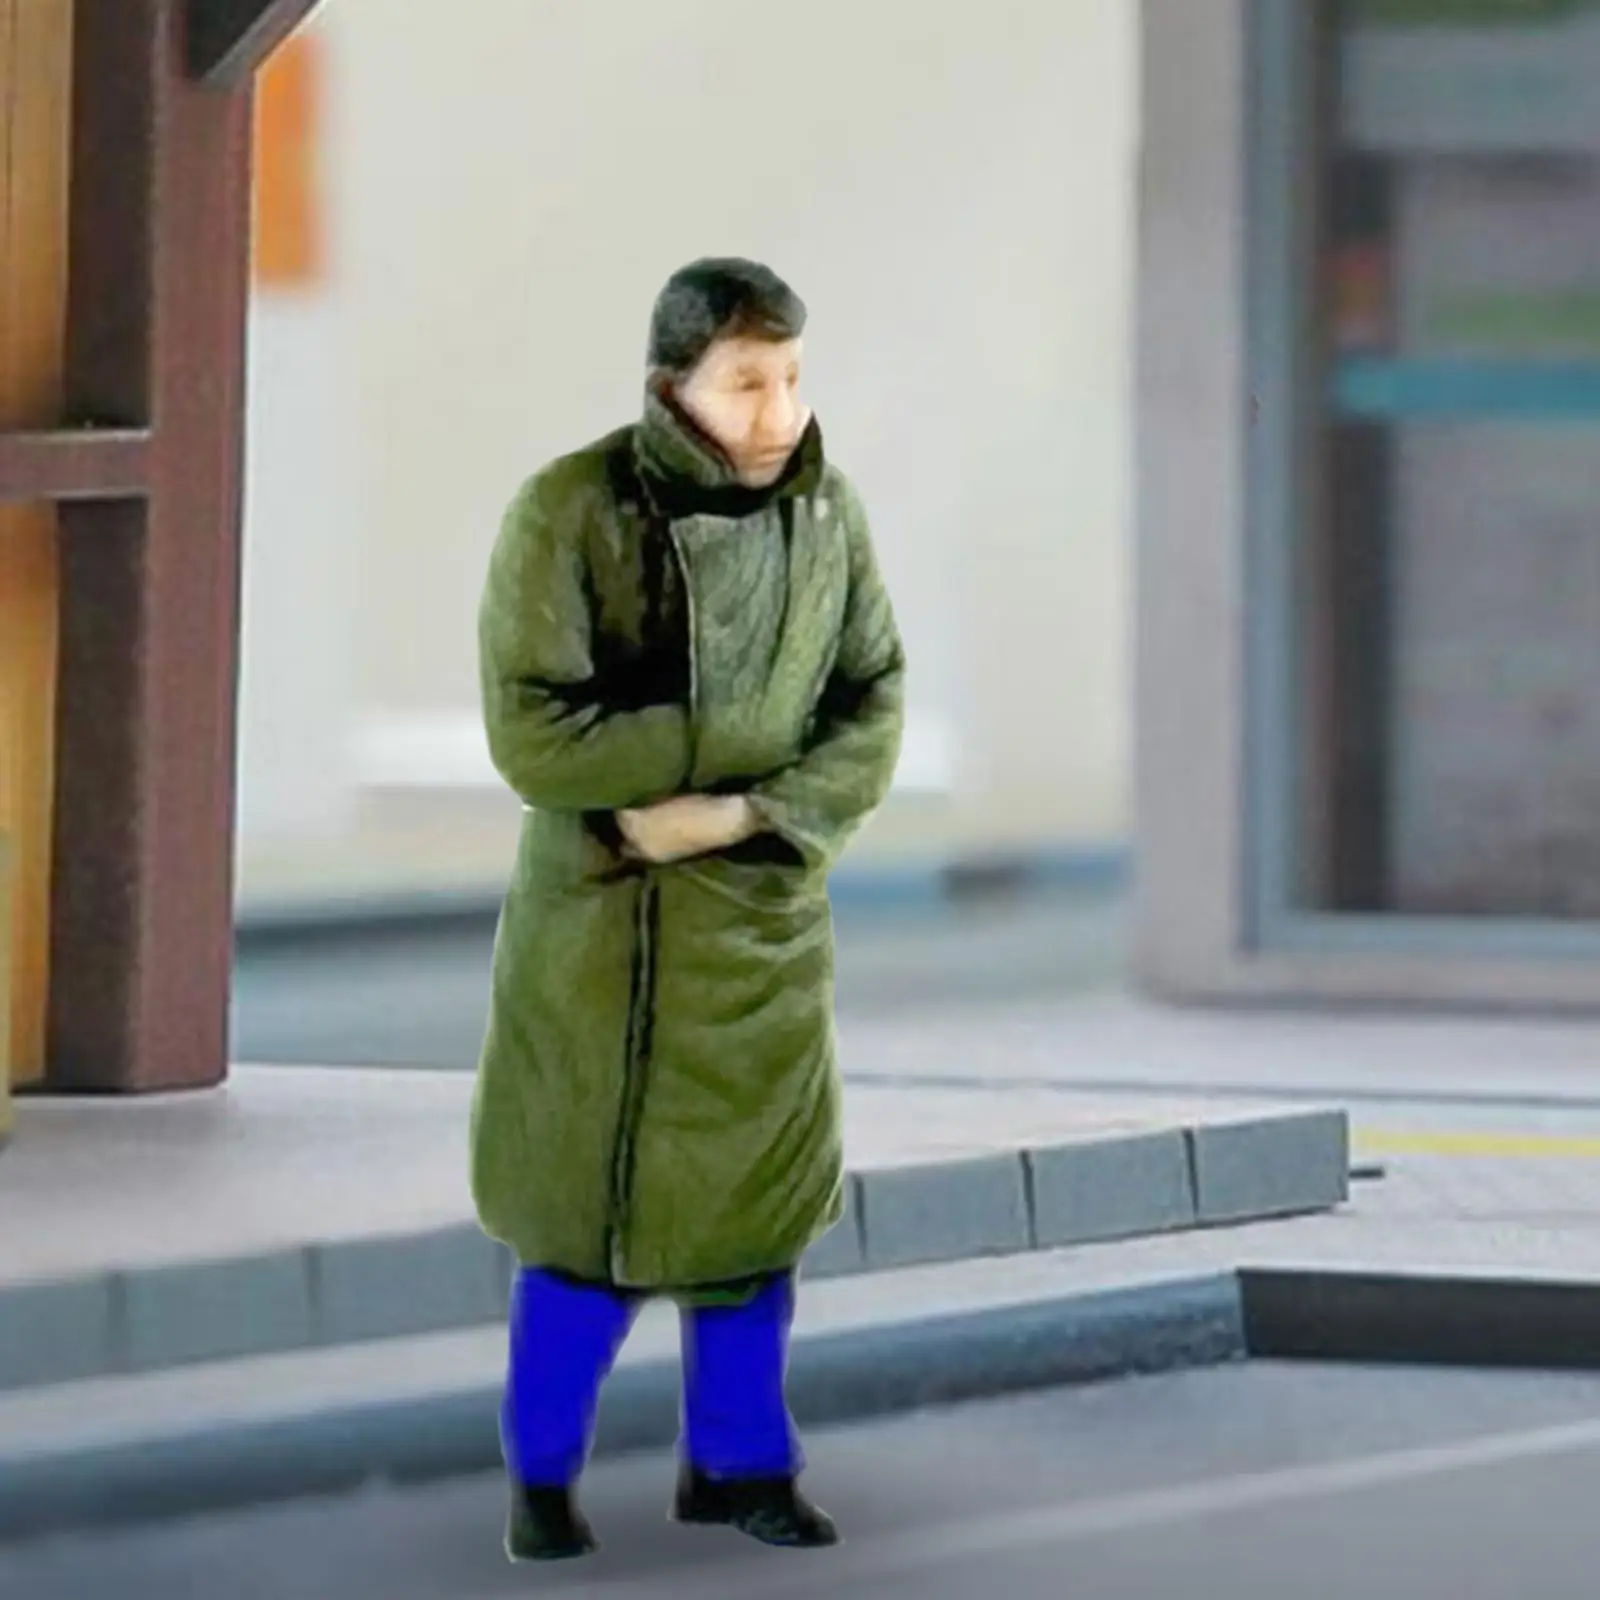 1:87 Realistic Diorama Character Figure Handmade Model Trains People Figures Diorama Action Figurines for Miniature Scene Layout